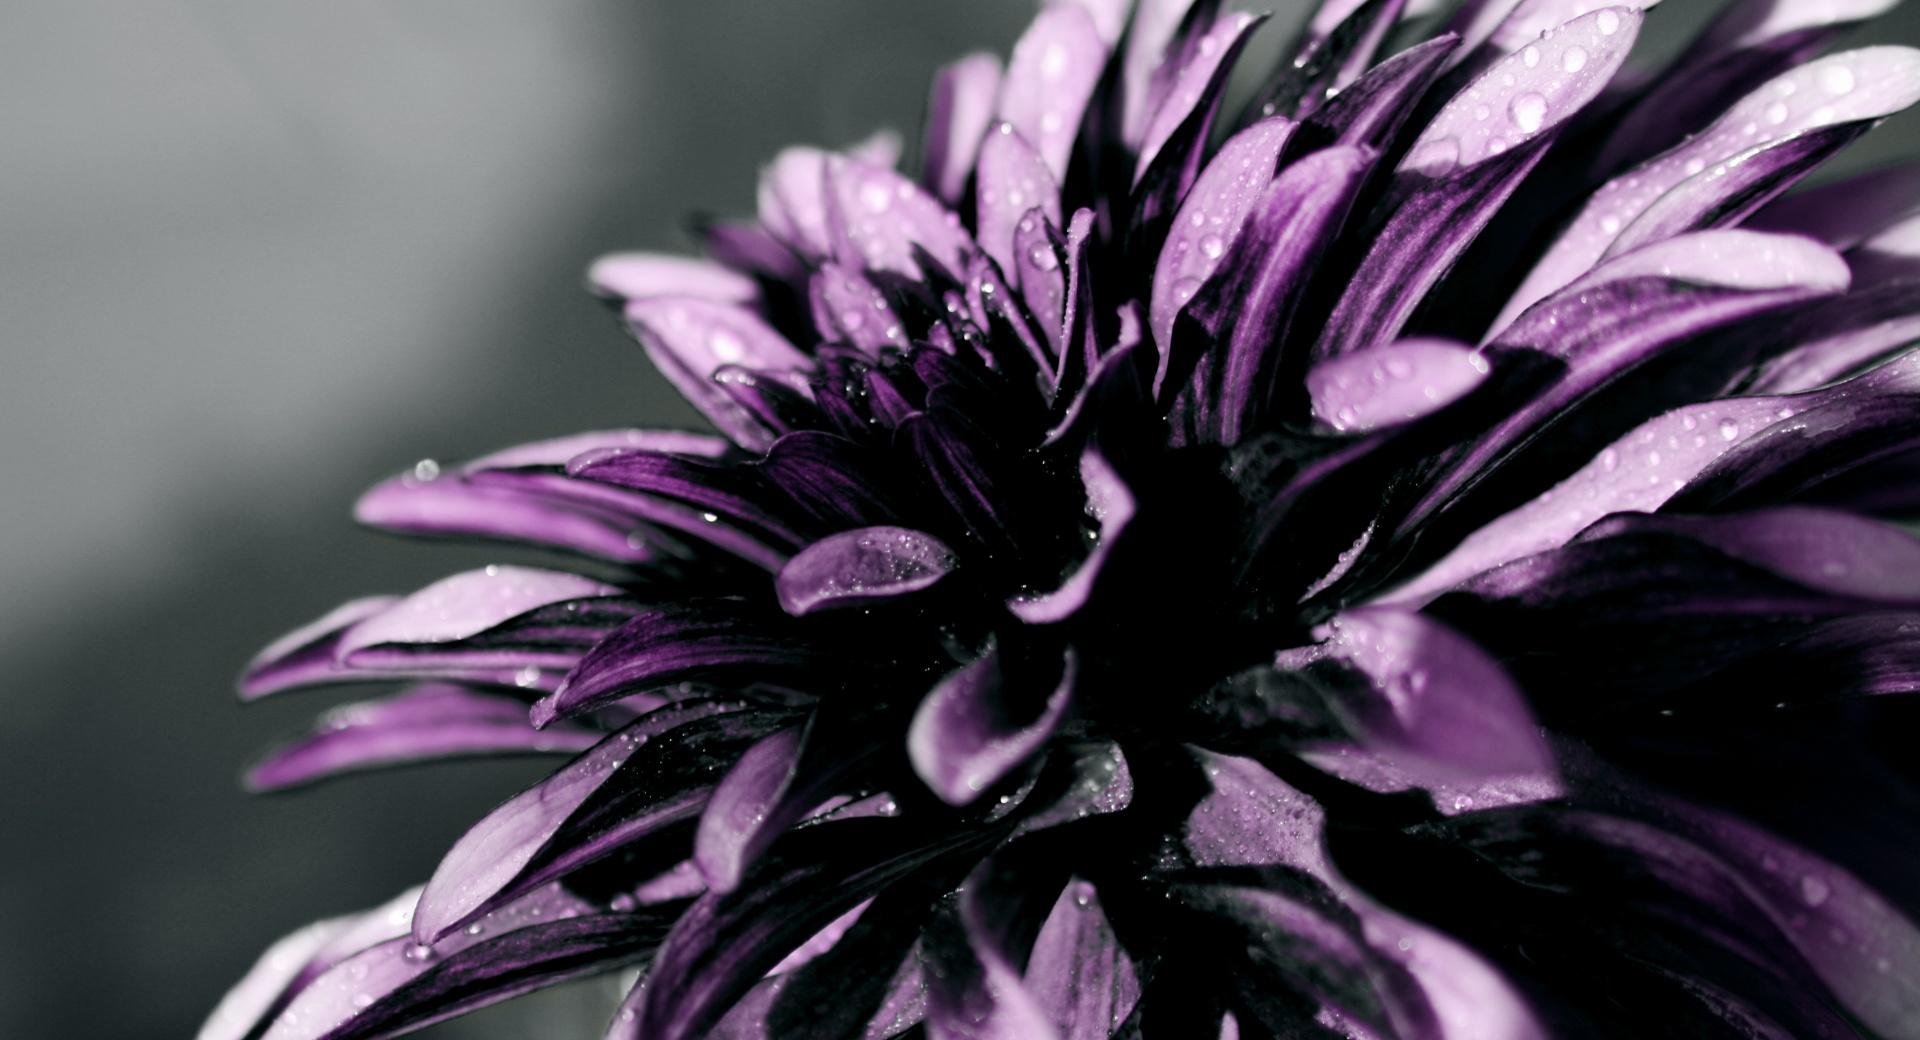 Purple Chrysanthemum Macro at 1152 x 864 size wallpapers HD quality